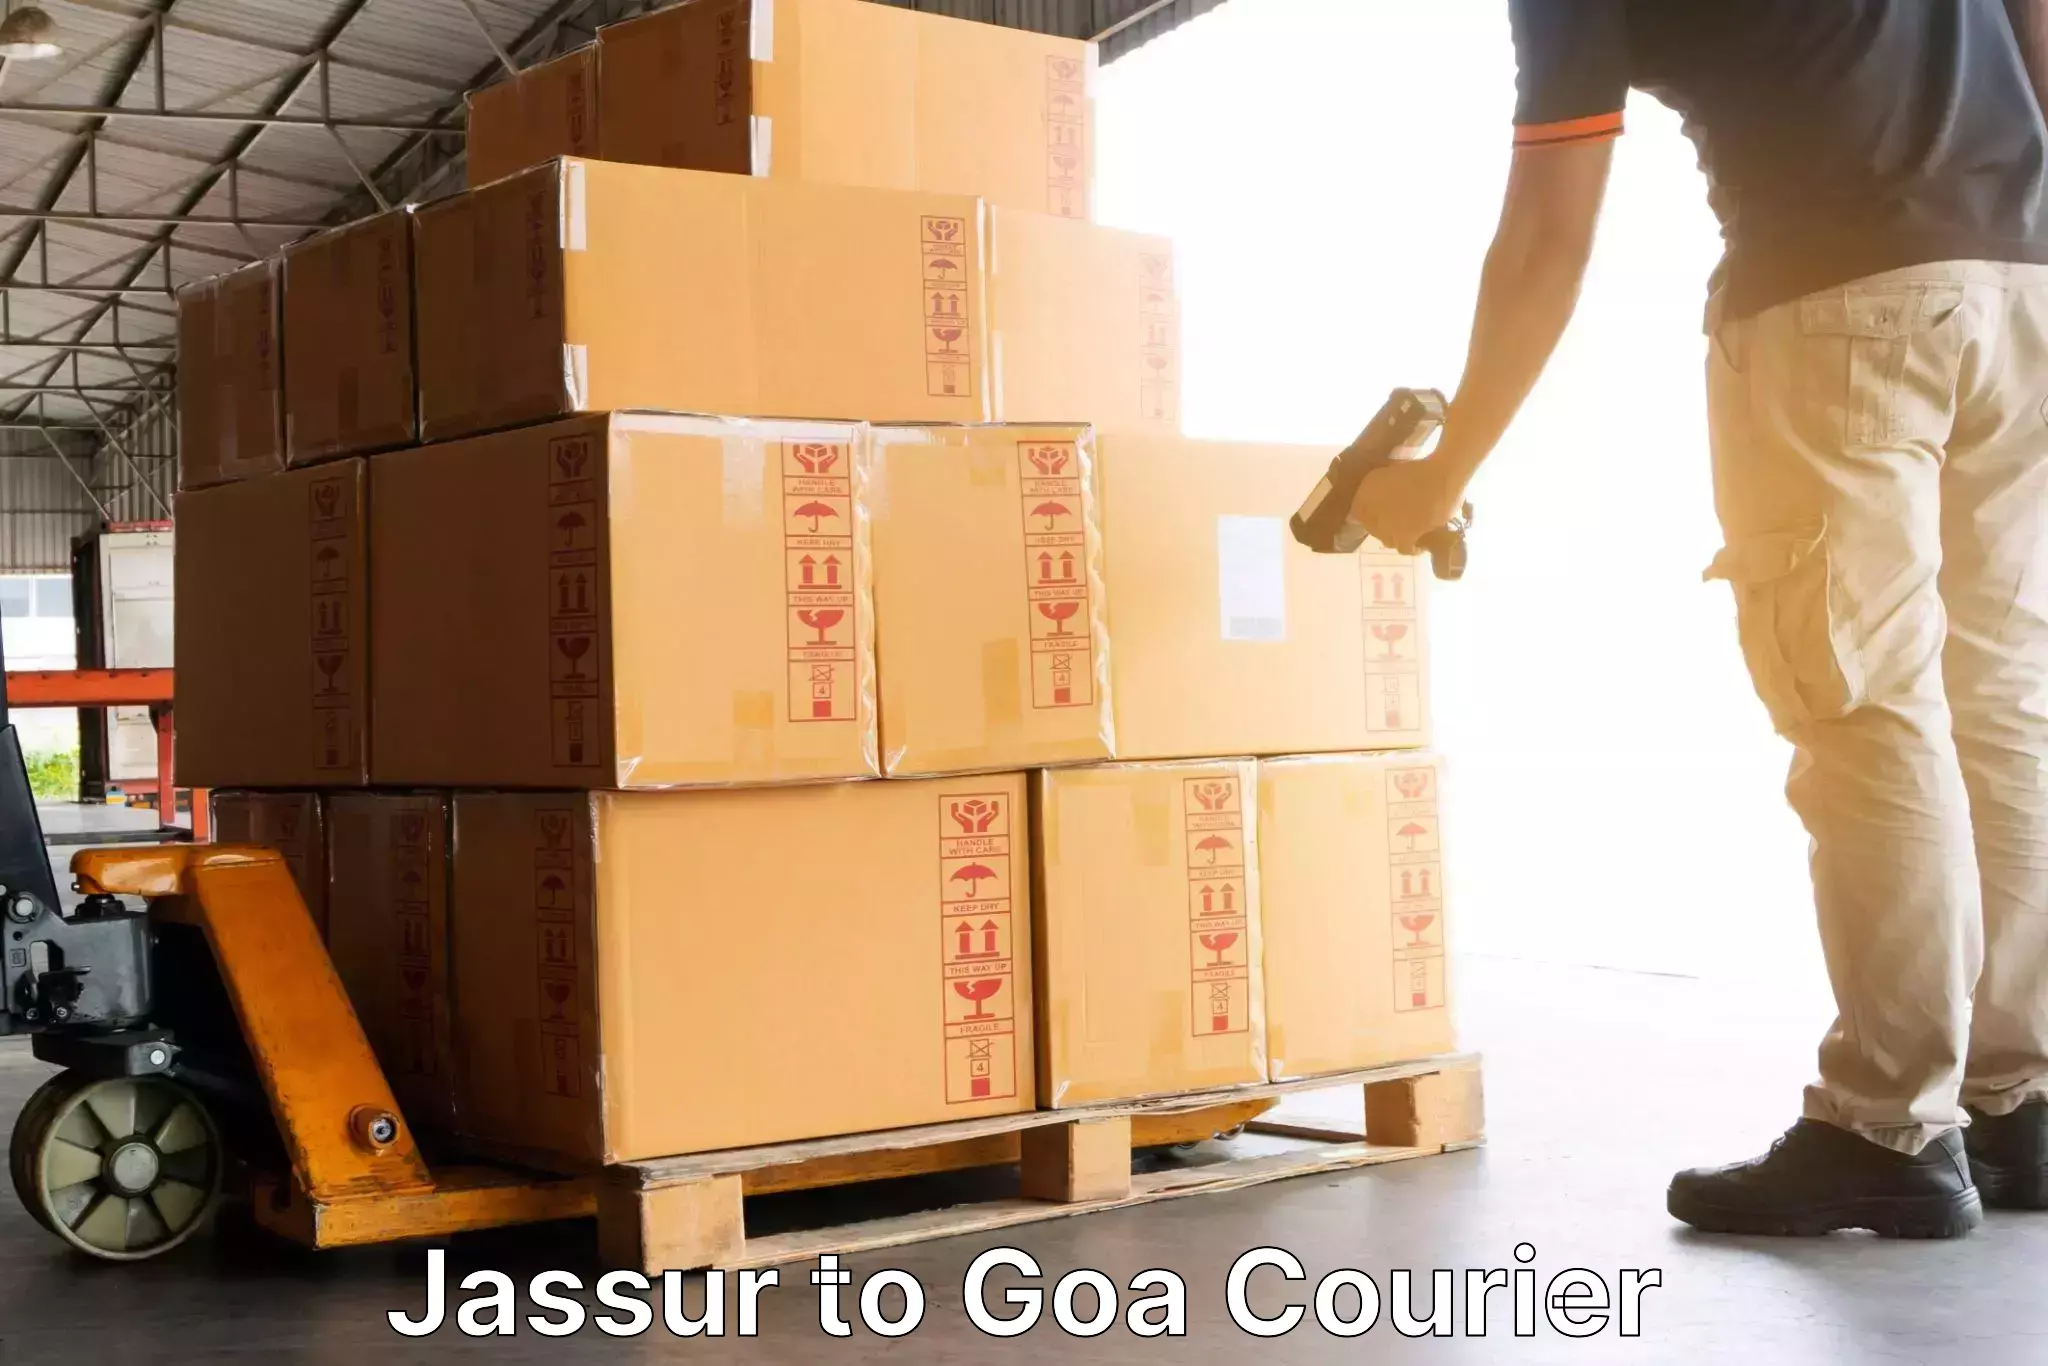 Efficient order fulfillment Jassur to Goa